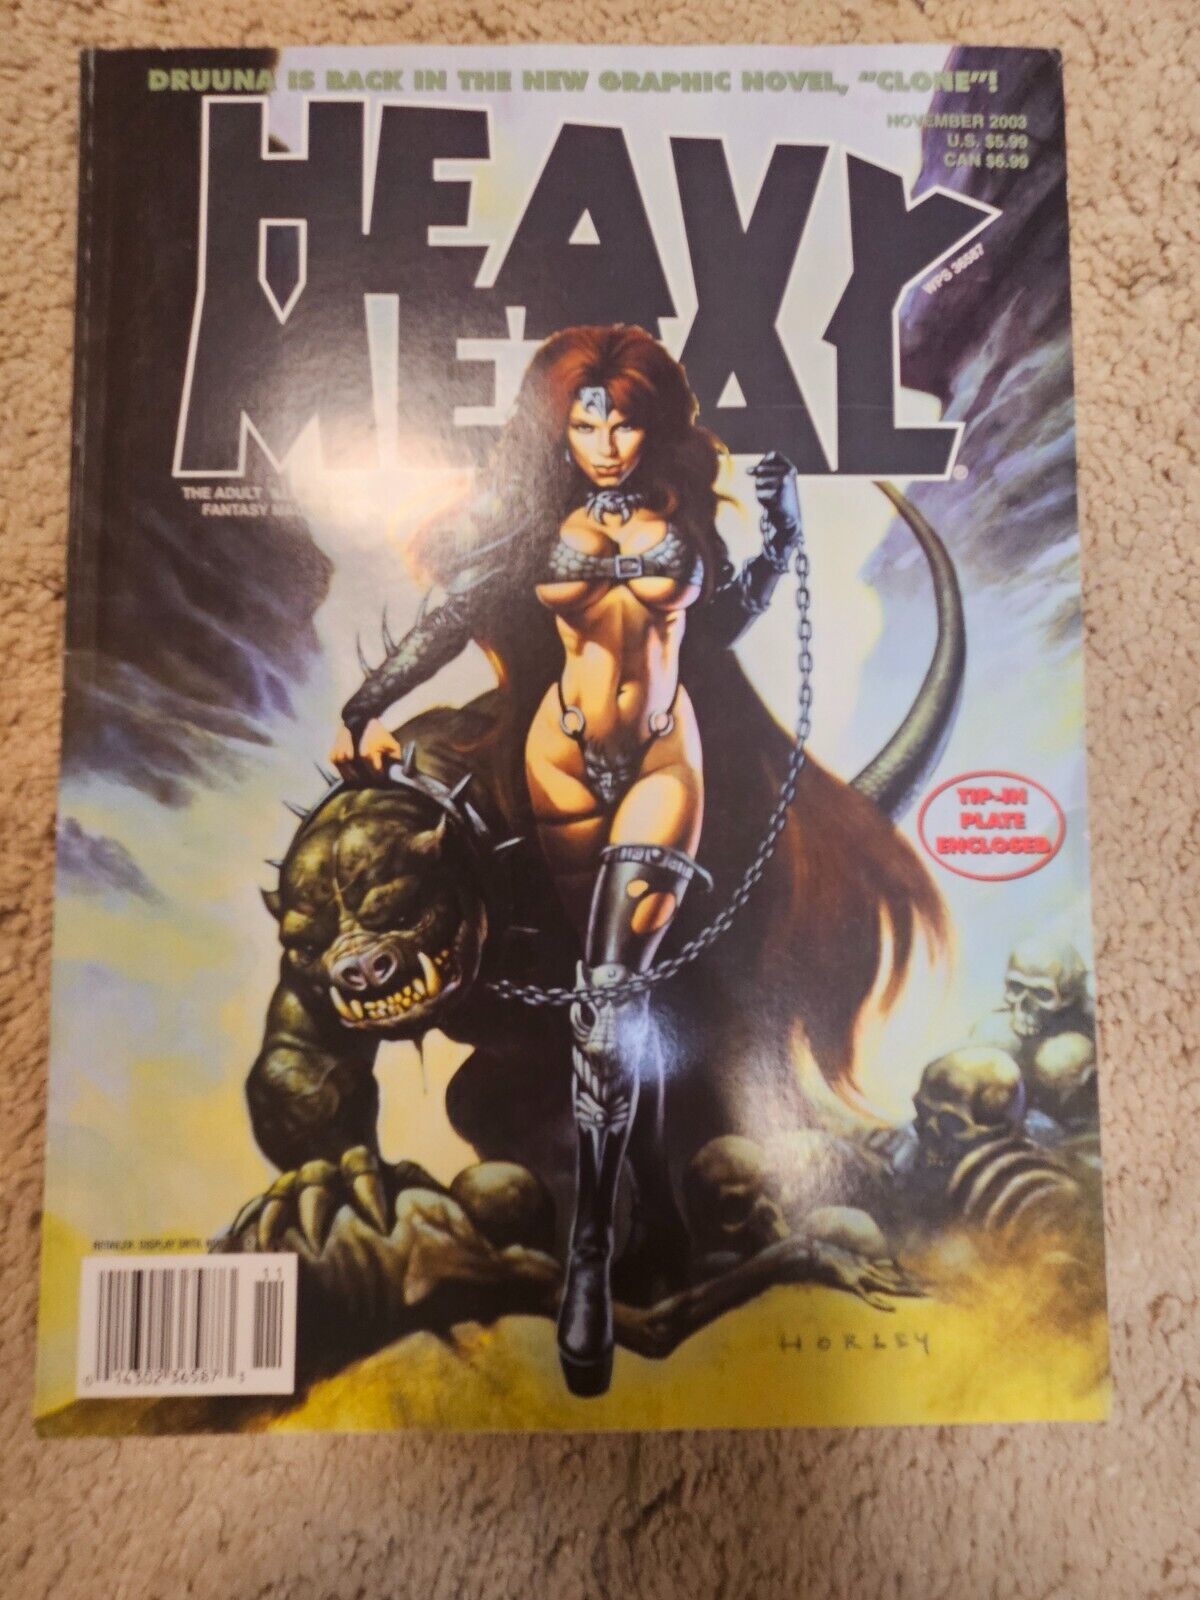 Heavy Metal Vol 27 #5 Adult Illustrated Fantasy Magazine November 2003 DRUUNA